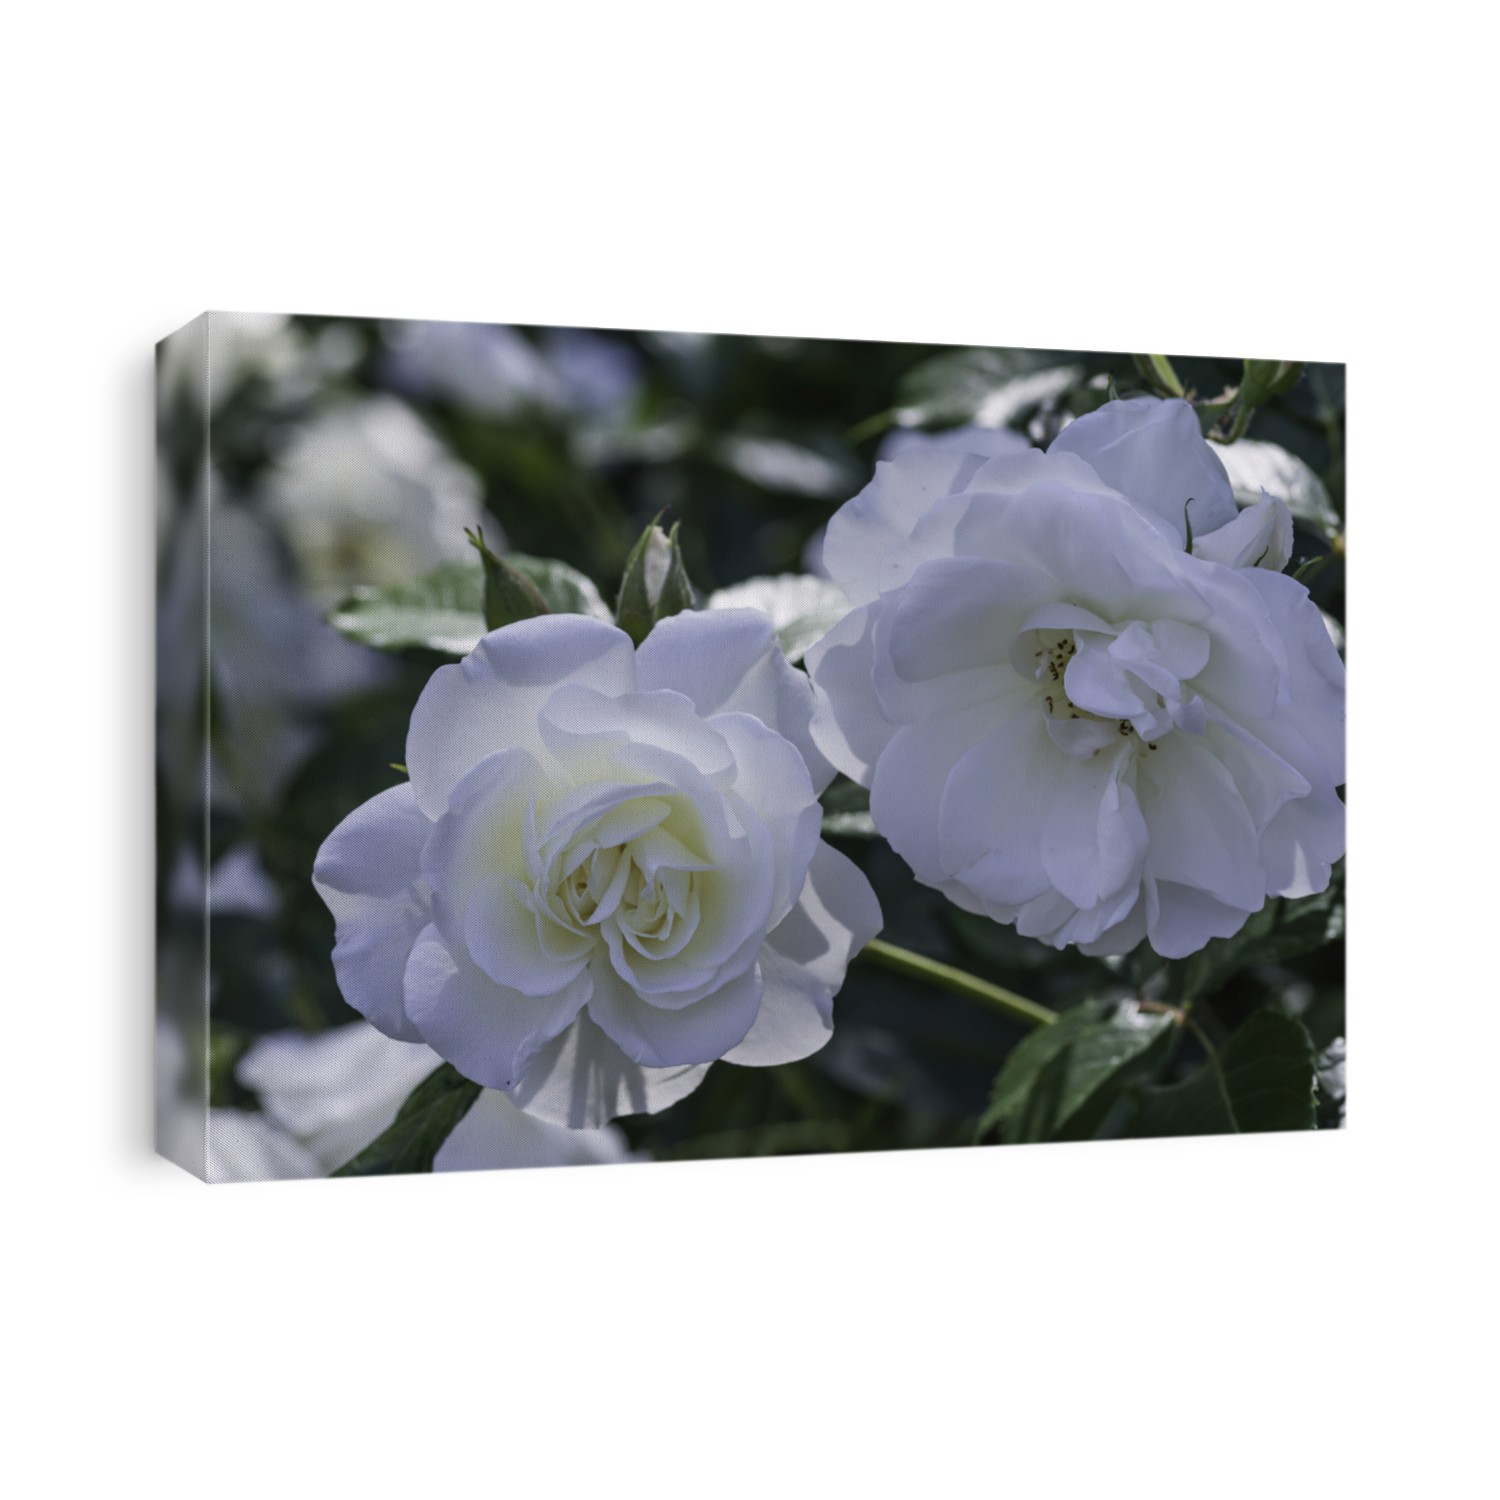 White rose. Species Rosa alba meidiland